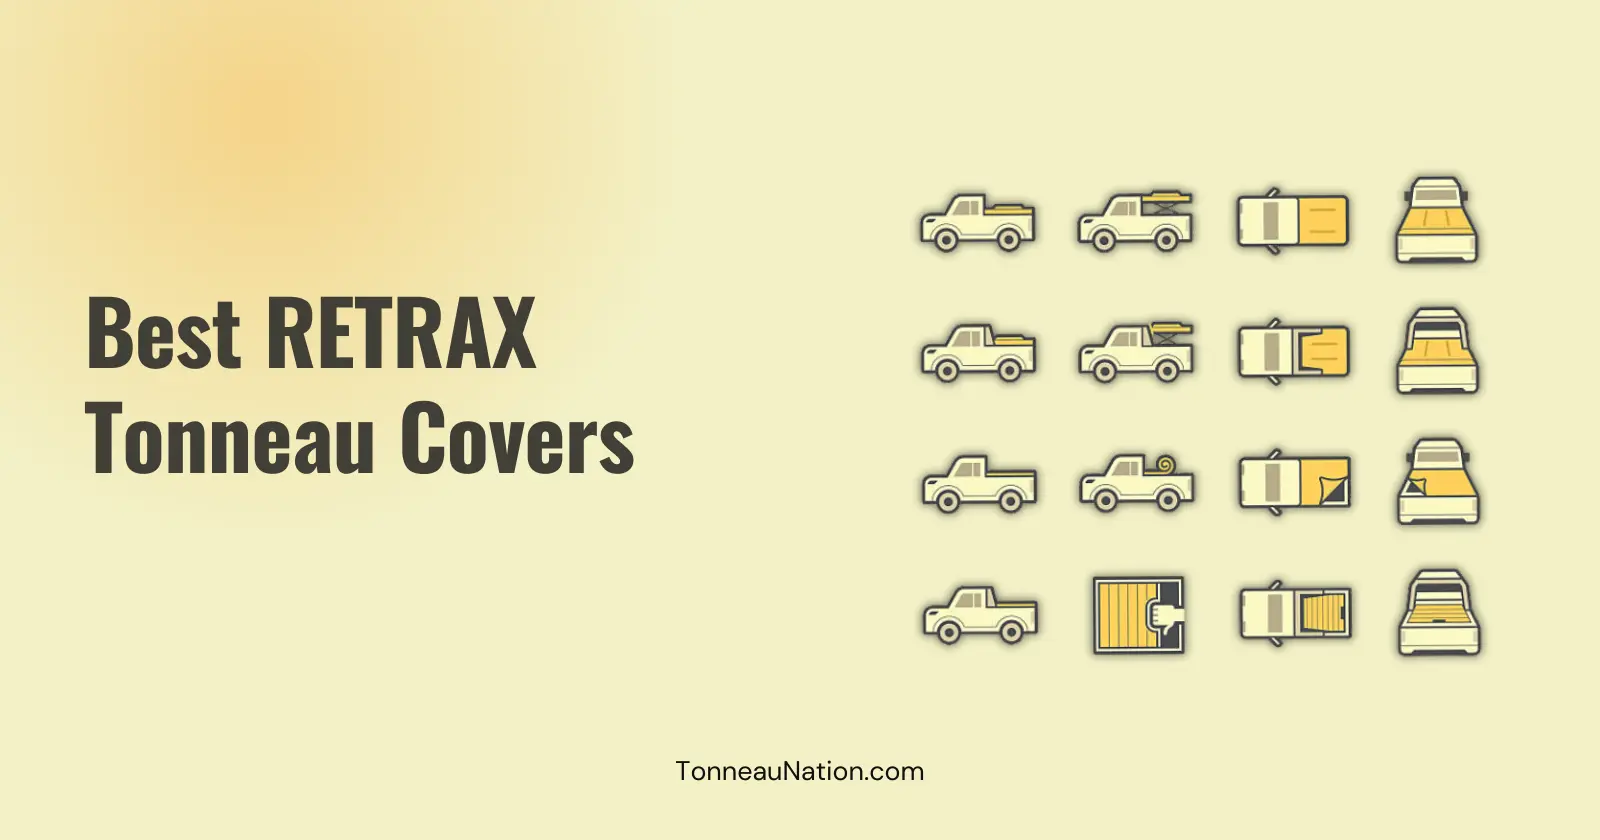 Tonneau cover from RETRAX brand